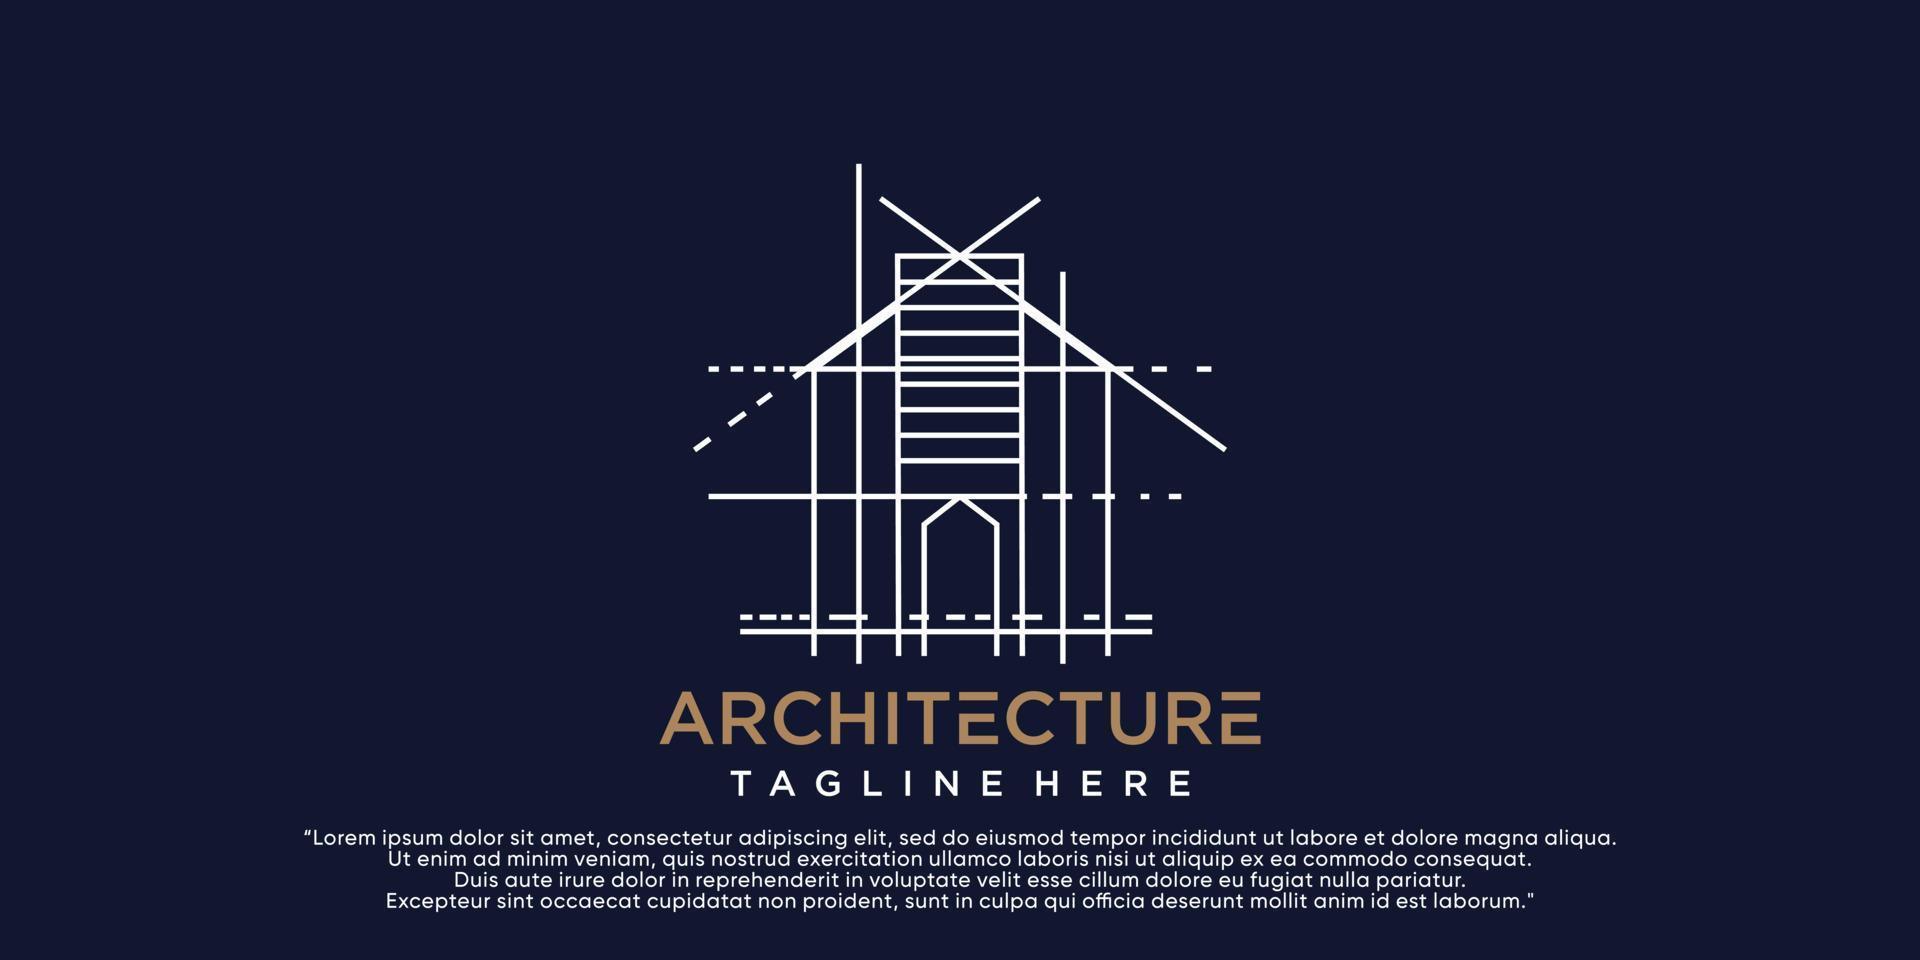 byggnad arkitektur logotyp design inspiration samling av arkitektur verklig egendom logotyp premie vektor